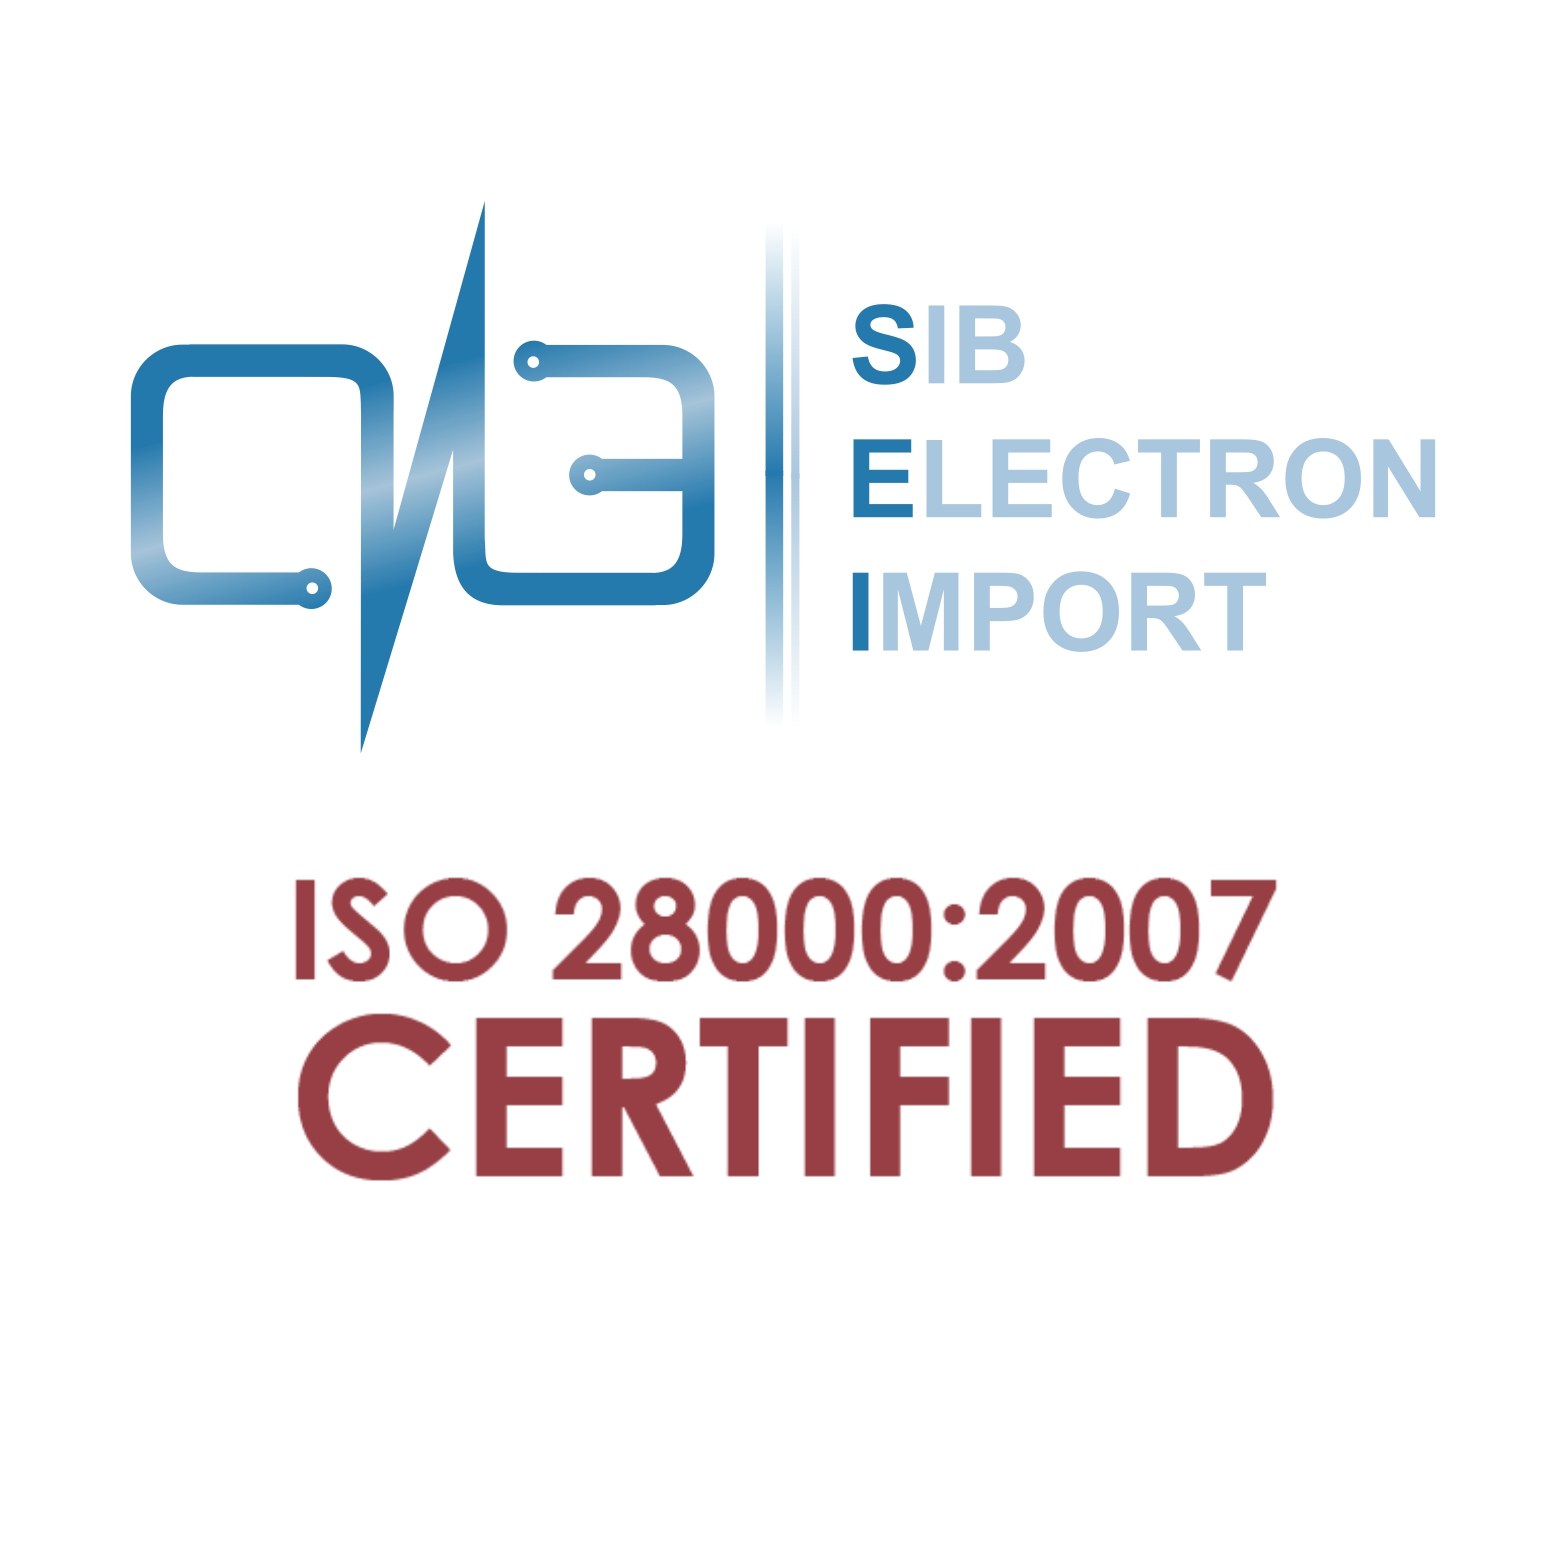 Компания Сибэлектронимпорт прошла сертификацию ISO 28000:2007